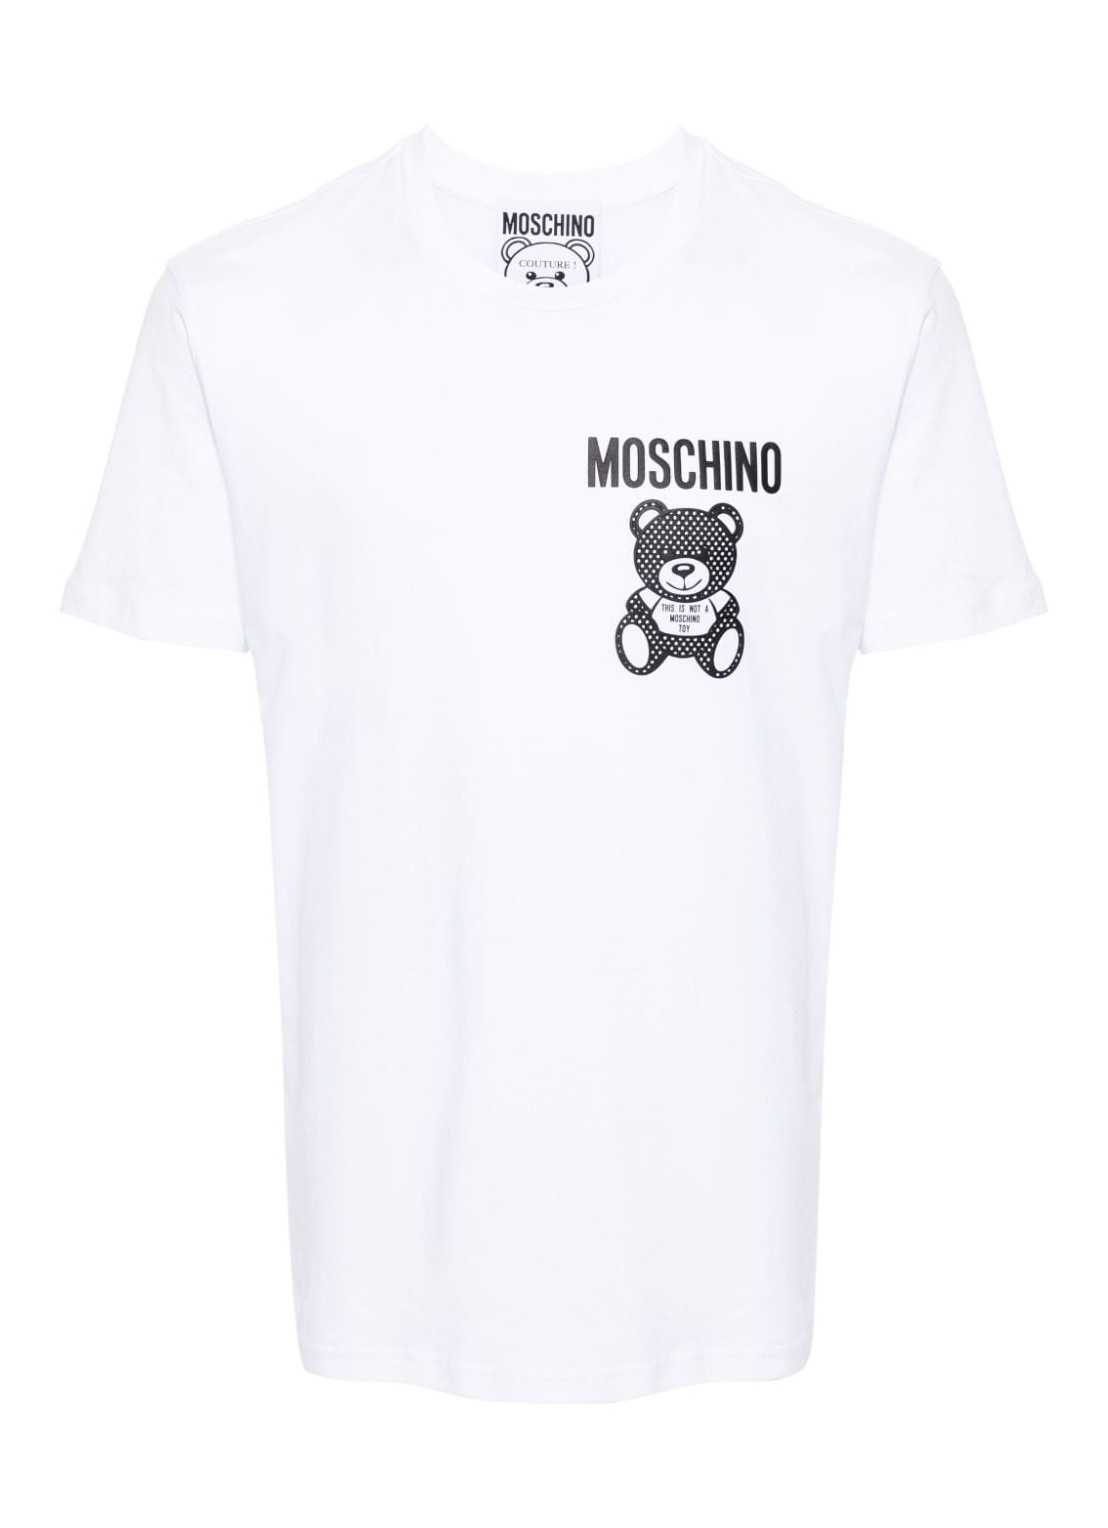 Camiseta moschino couture t-shirt man t-shirt 07292041 v1001 talla 48
 